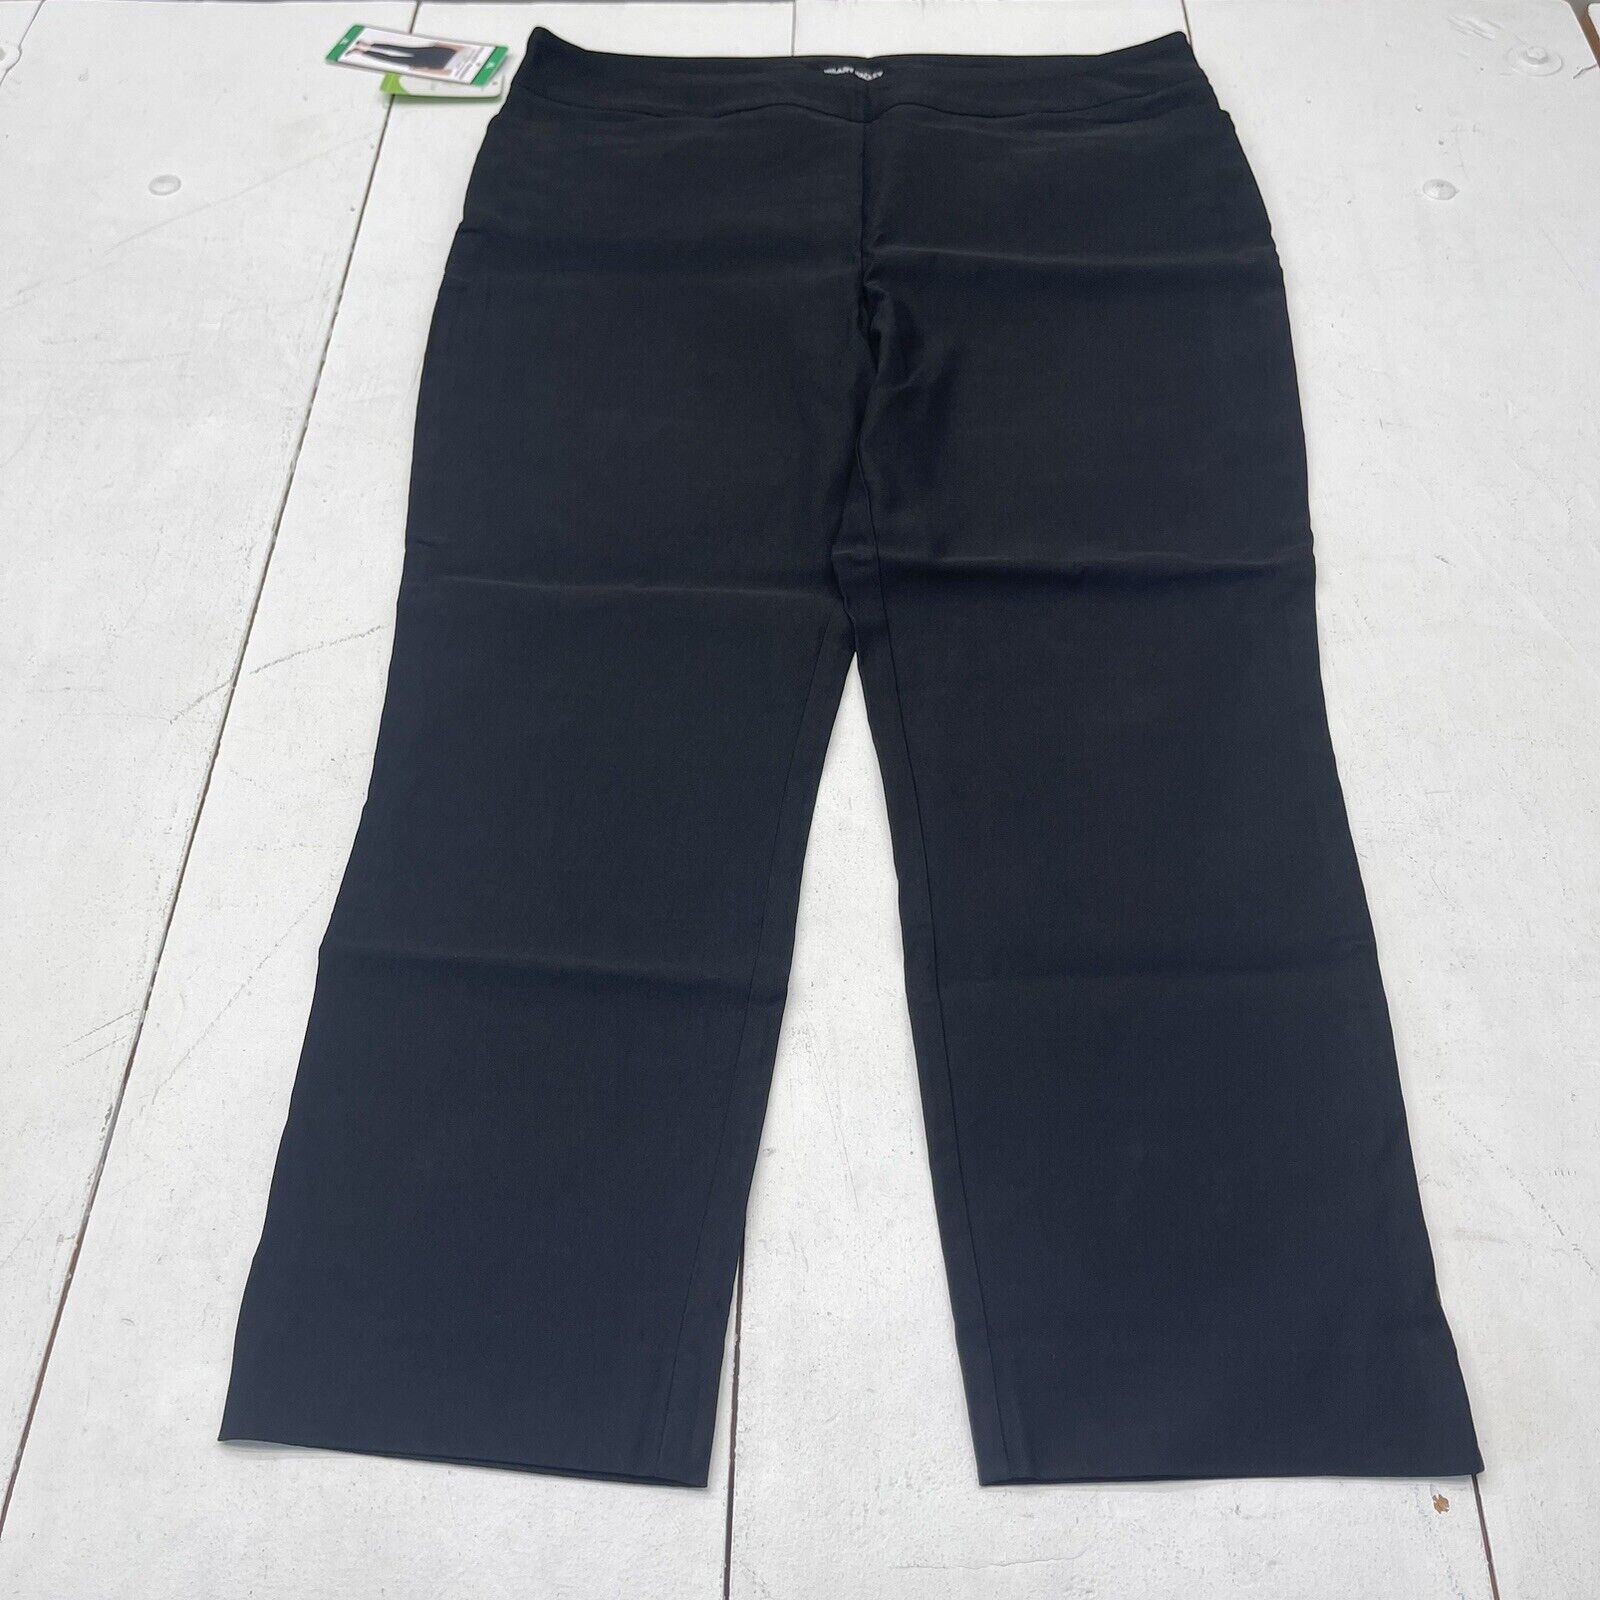 Hilary Radley Black Tummy Control Panel 27” Pants Women's Size XL